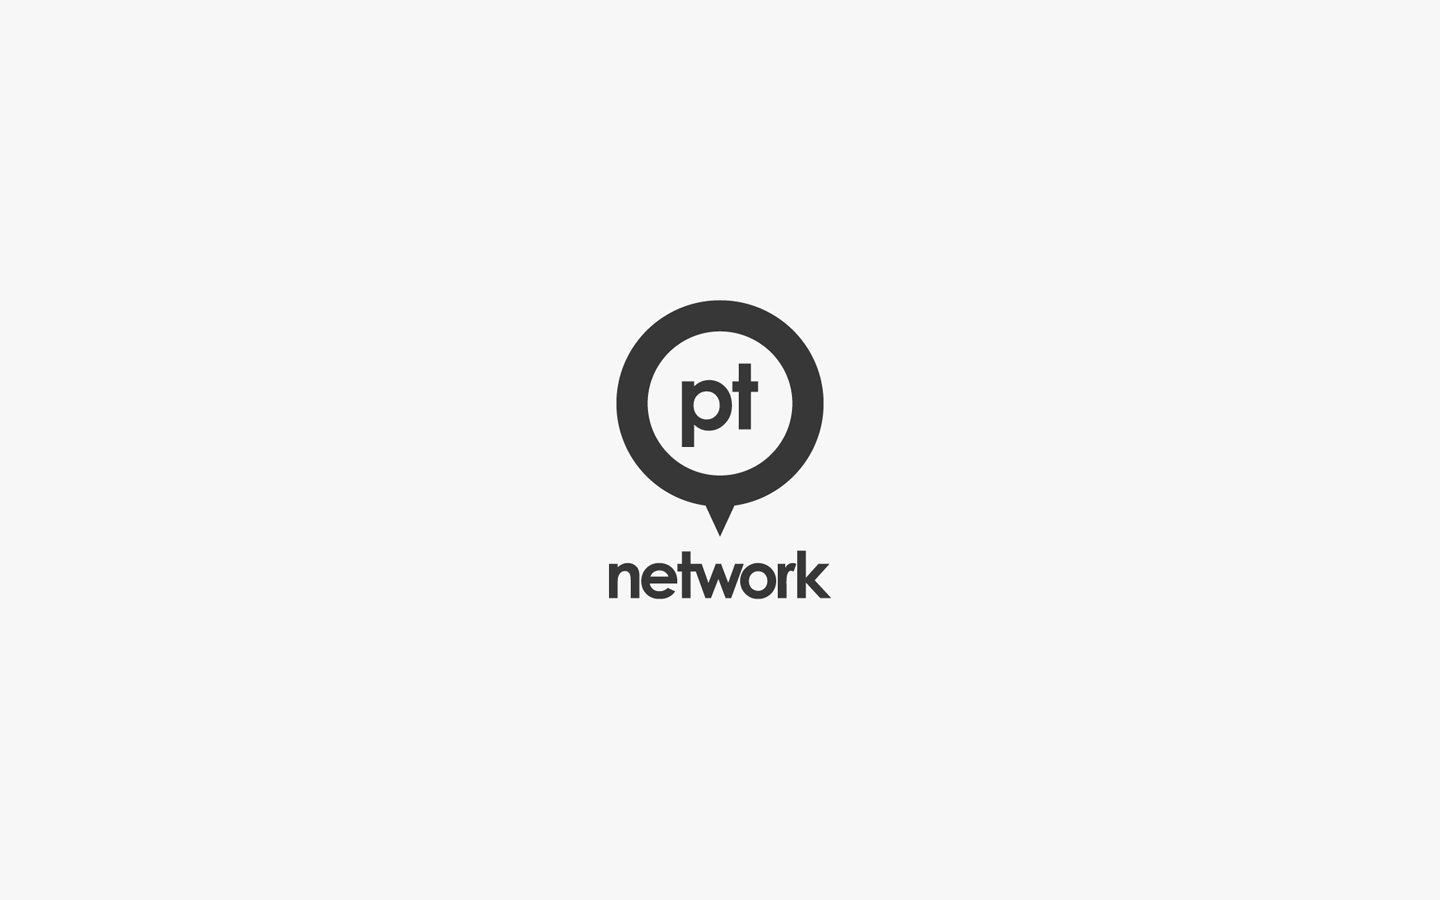 PT Network Logo Design in Mono